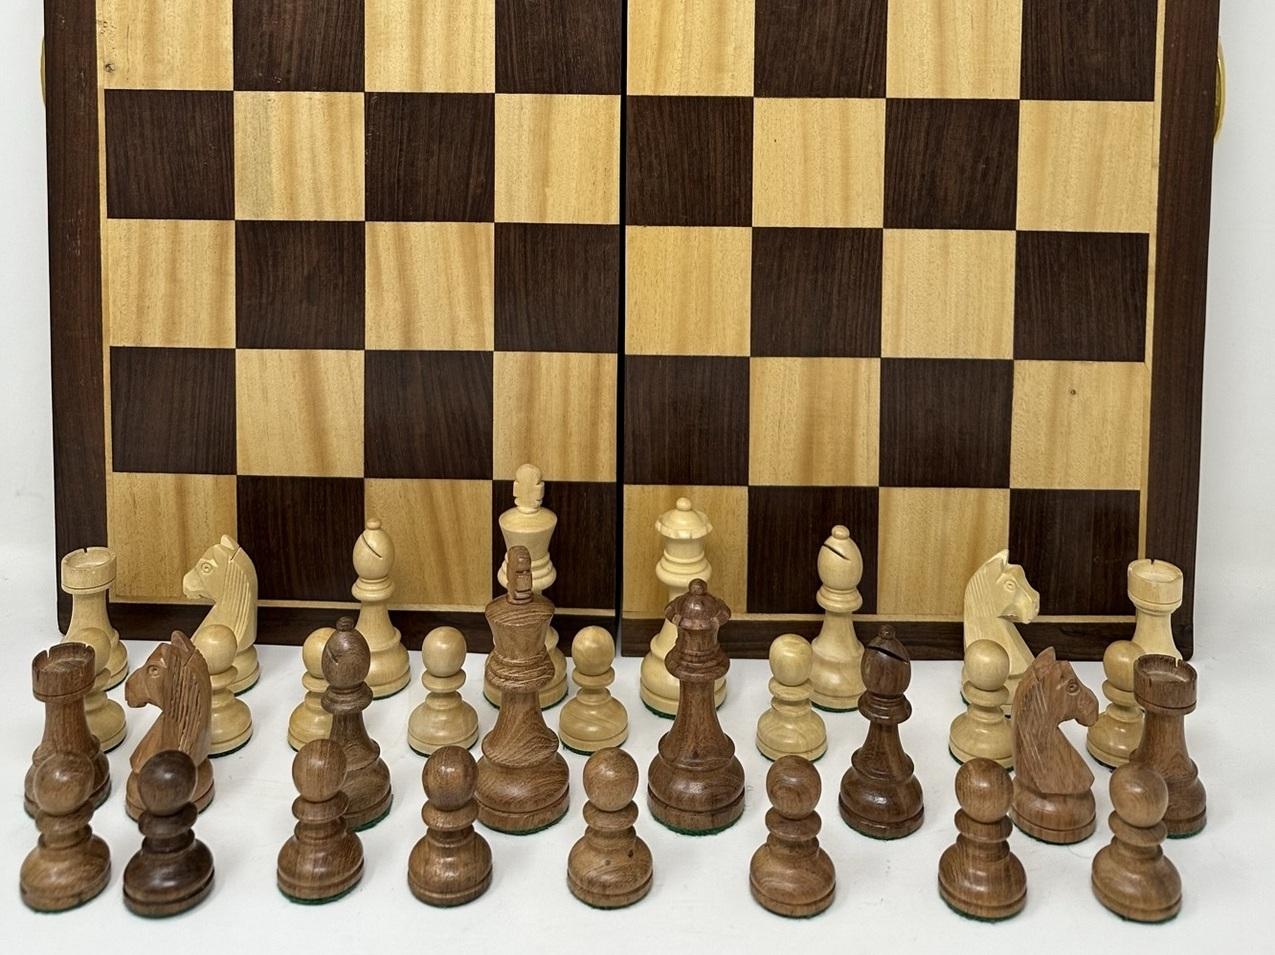 tyler the creator chess set